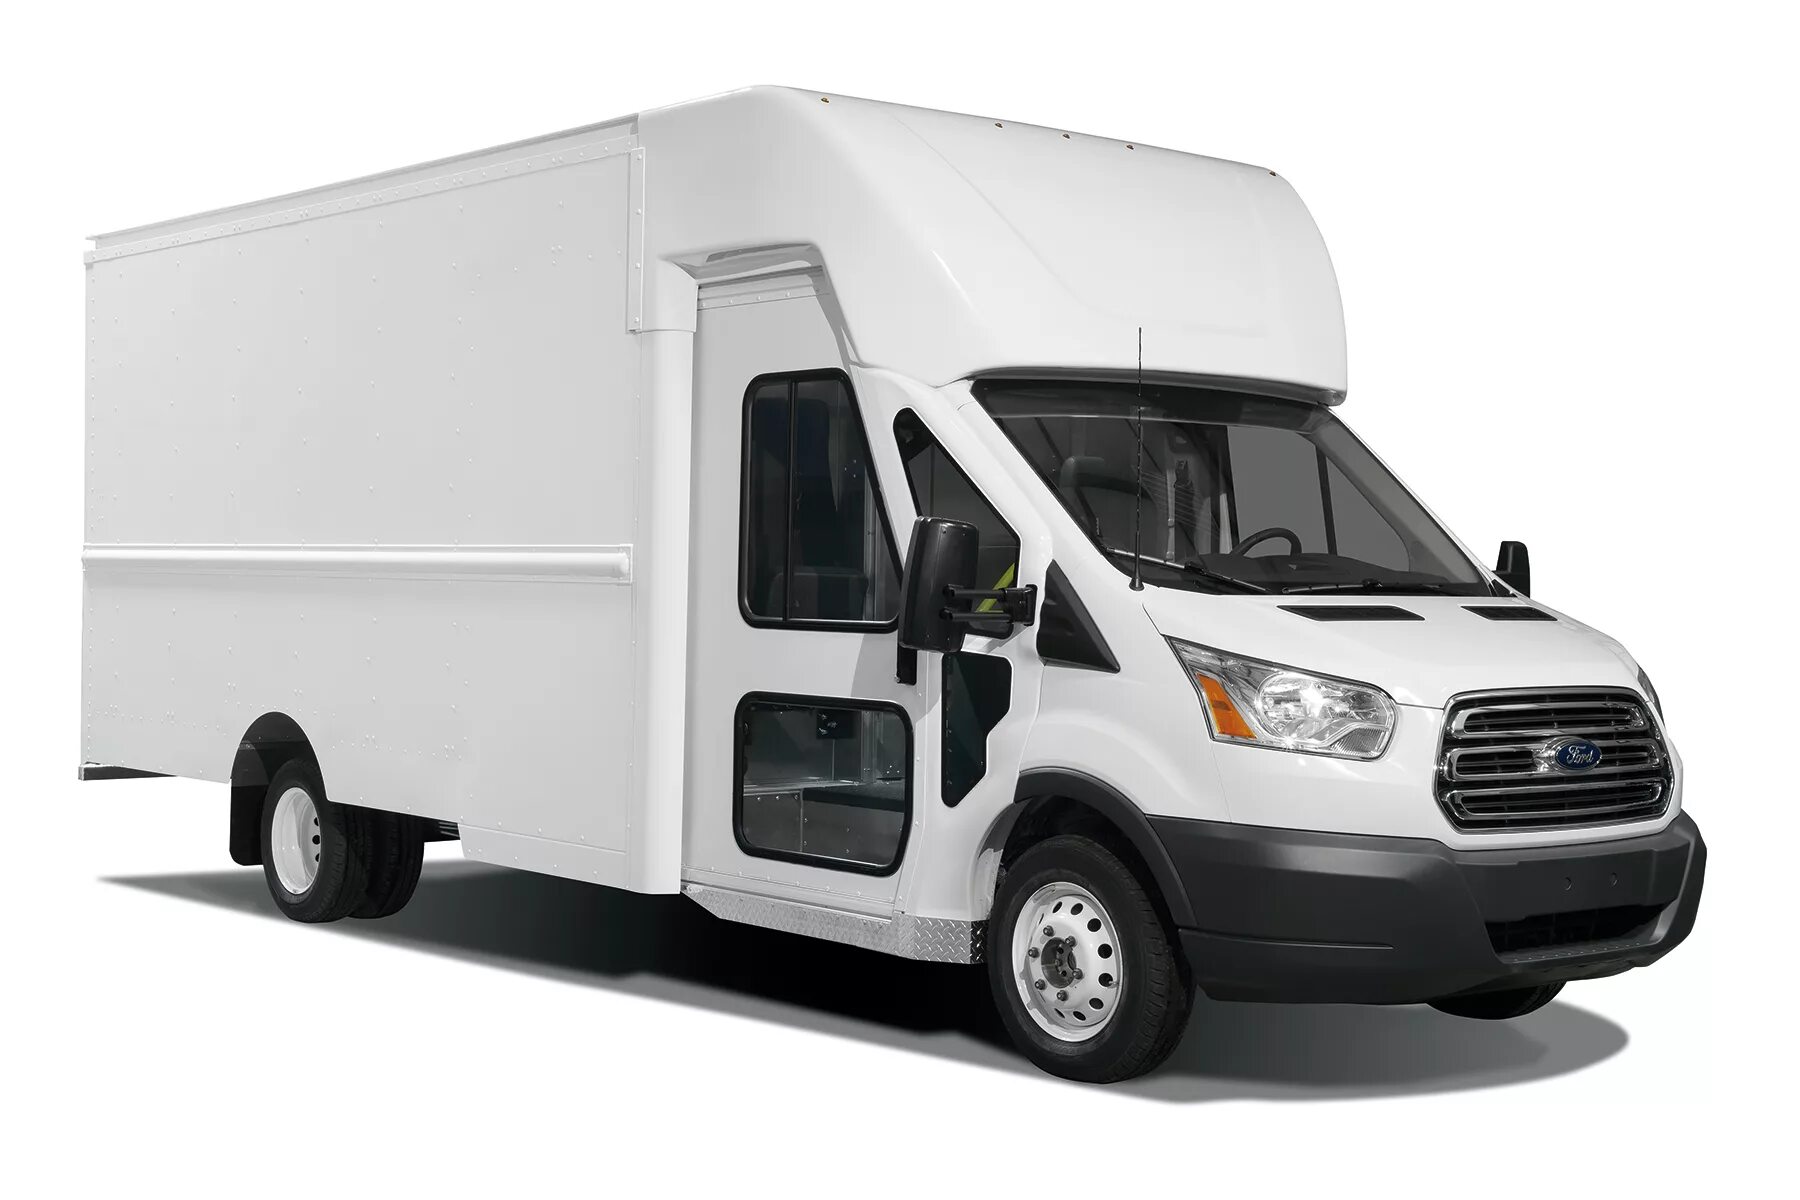 Ford Transit v184 фургон. Ford Transit 2018 грузовой фургон. Ford Transit Cargo van. Ford Utilimaster Step van.